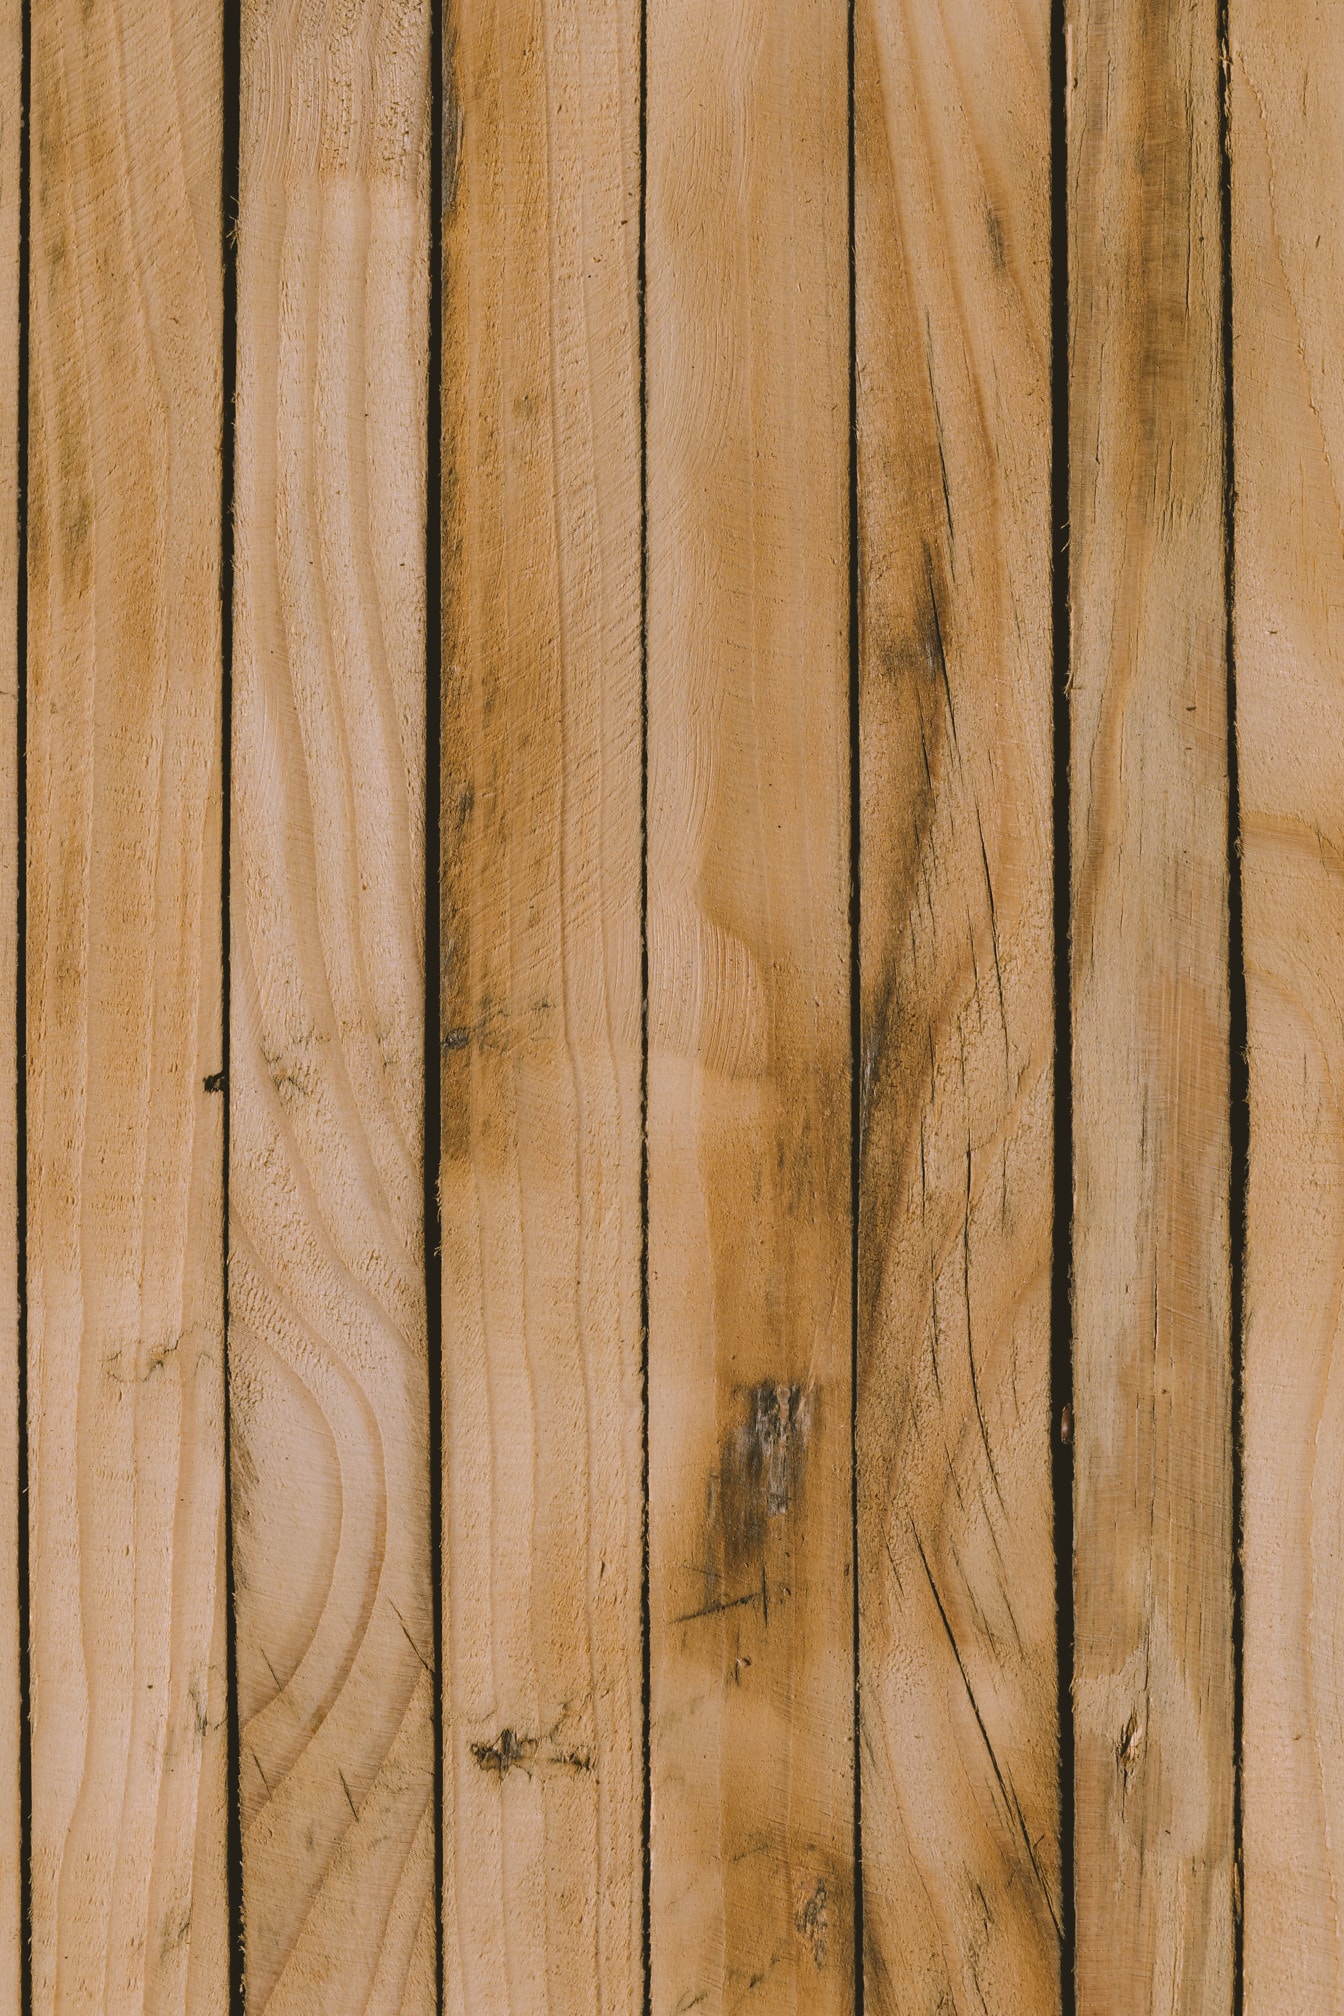 Pranchas verticais rústicas de madeira de lei textura marrom claro